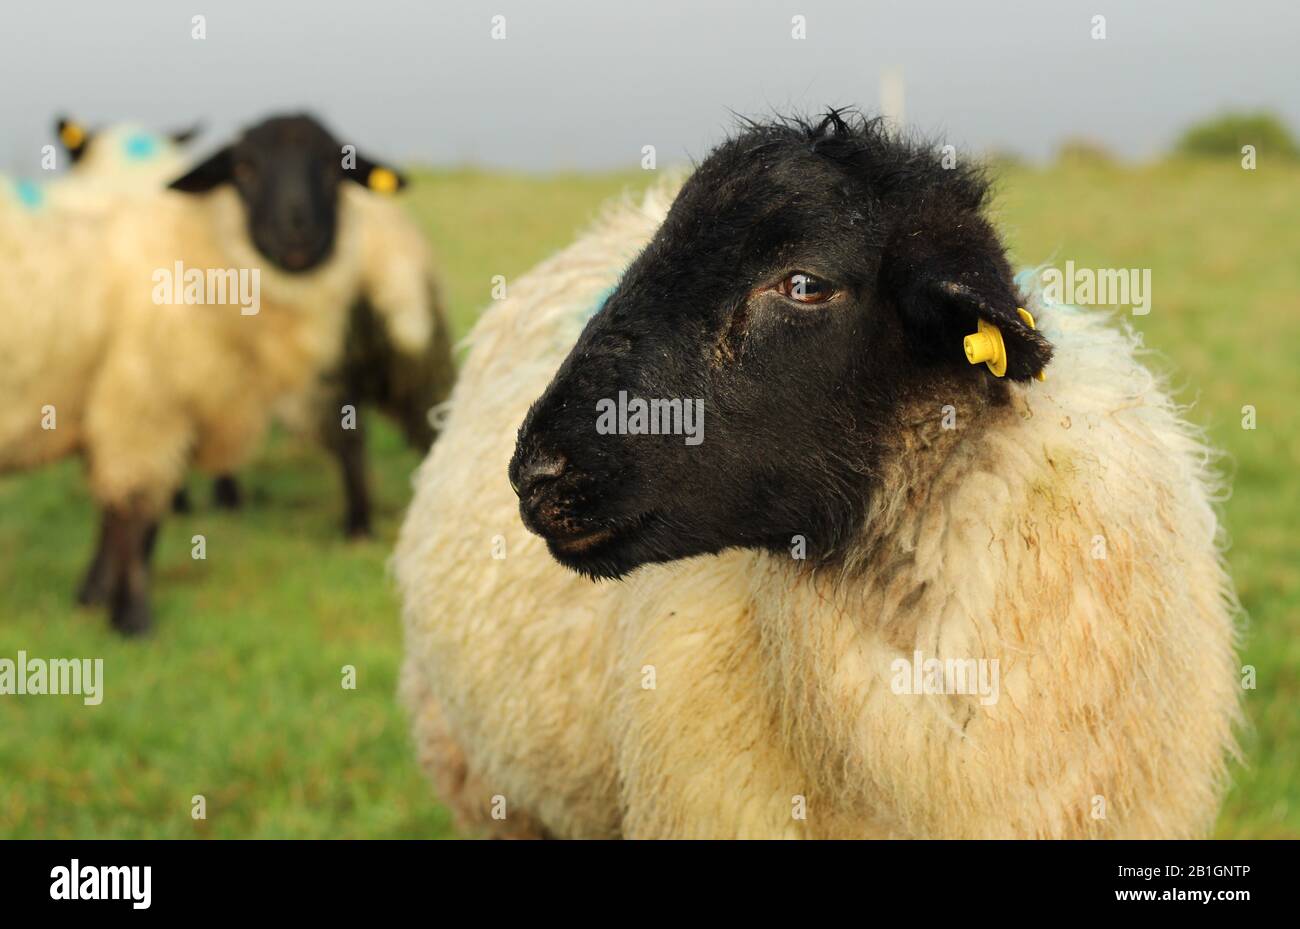 Suffolk Sheep Lamb close up side profile - Stock Photo